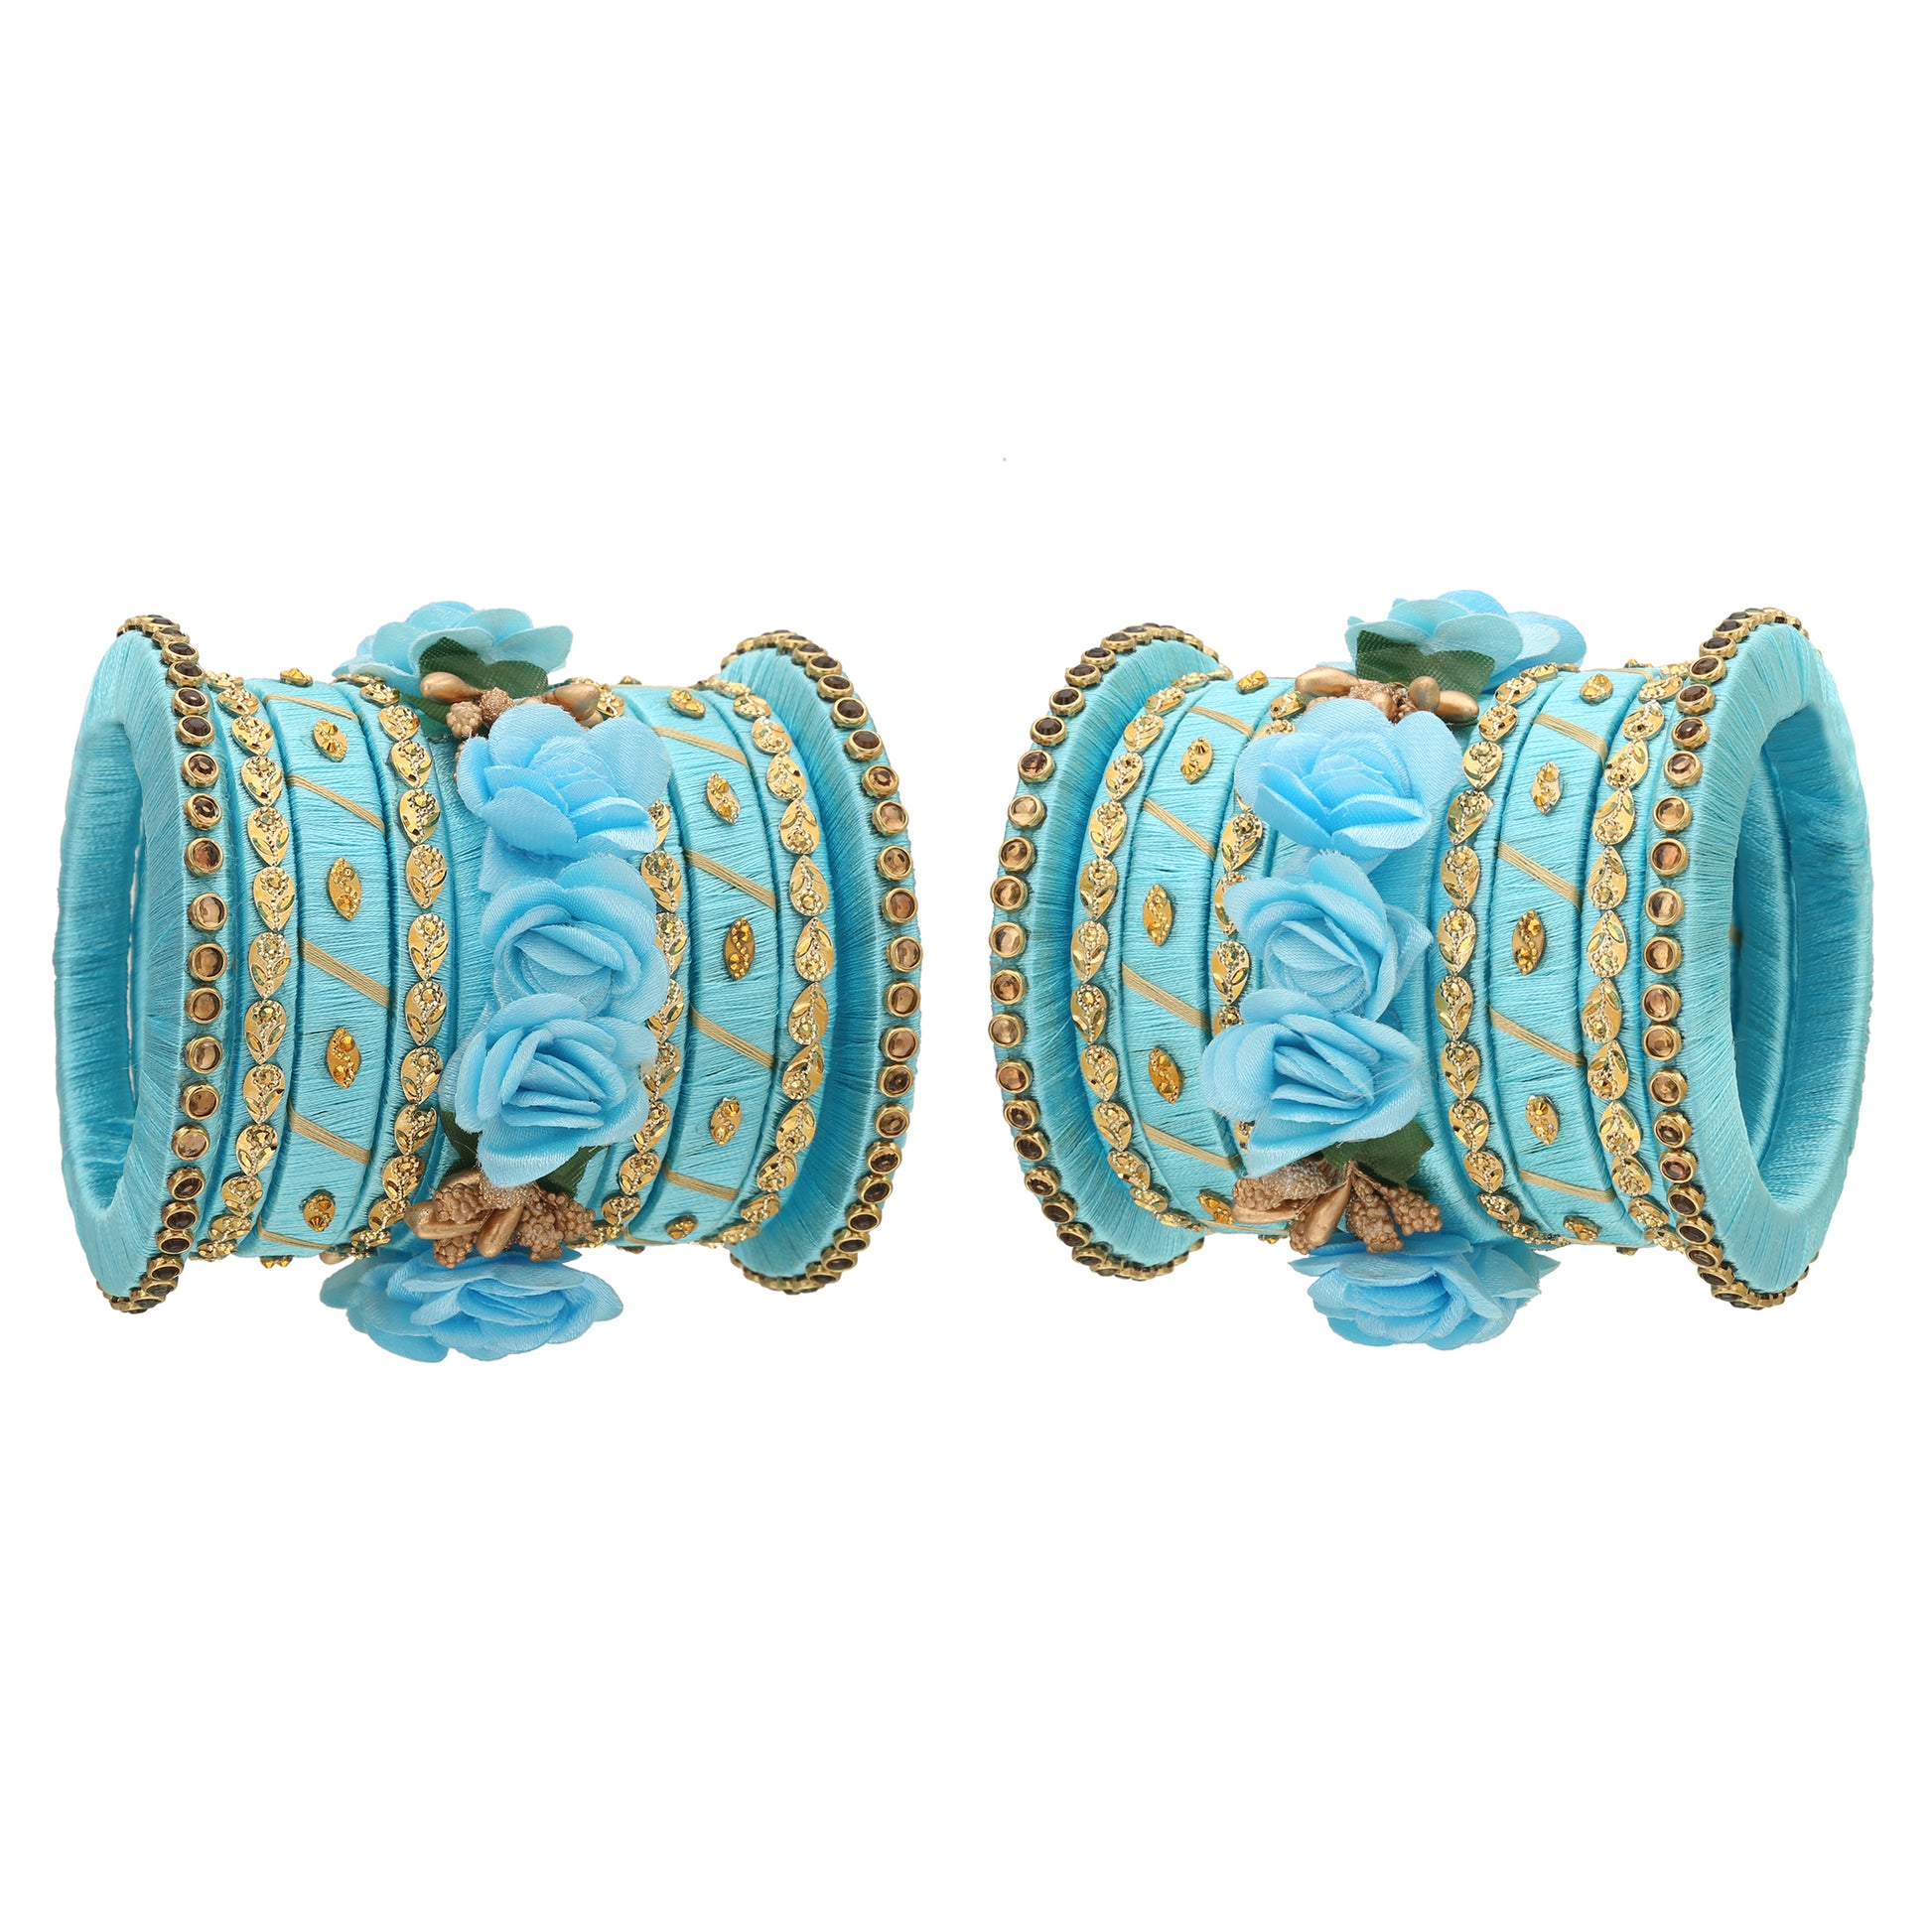 sukriti stylish handmade sky-blue flower designer silk thread plastic bridal chuda wedding bangles for women – set of 18